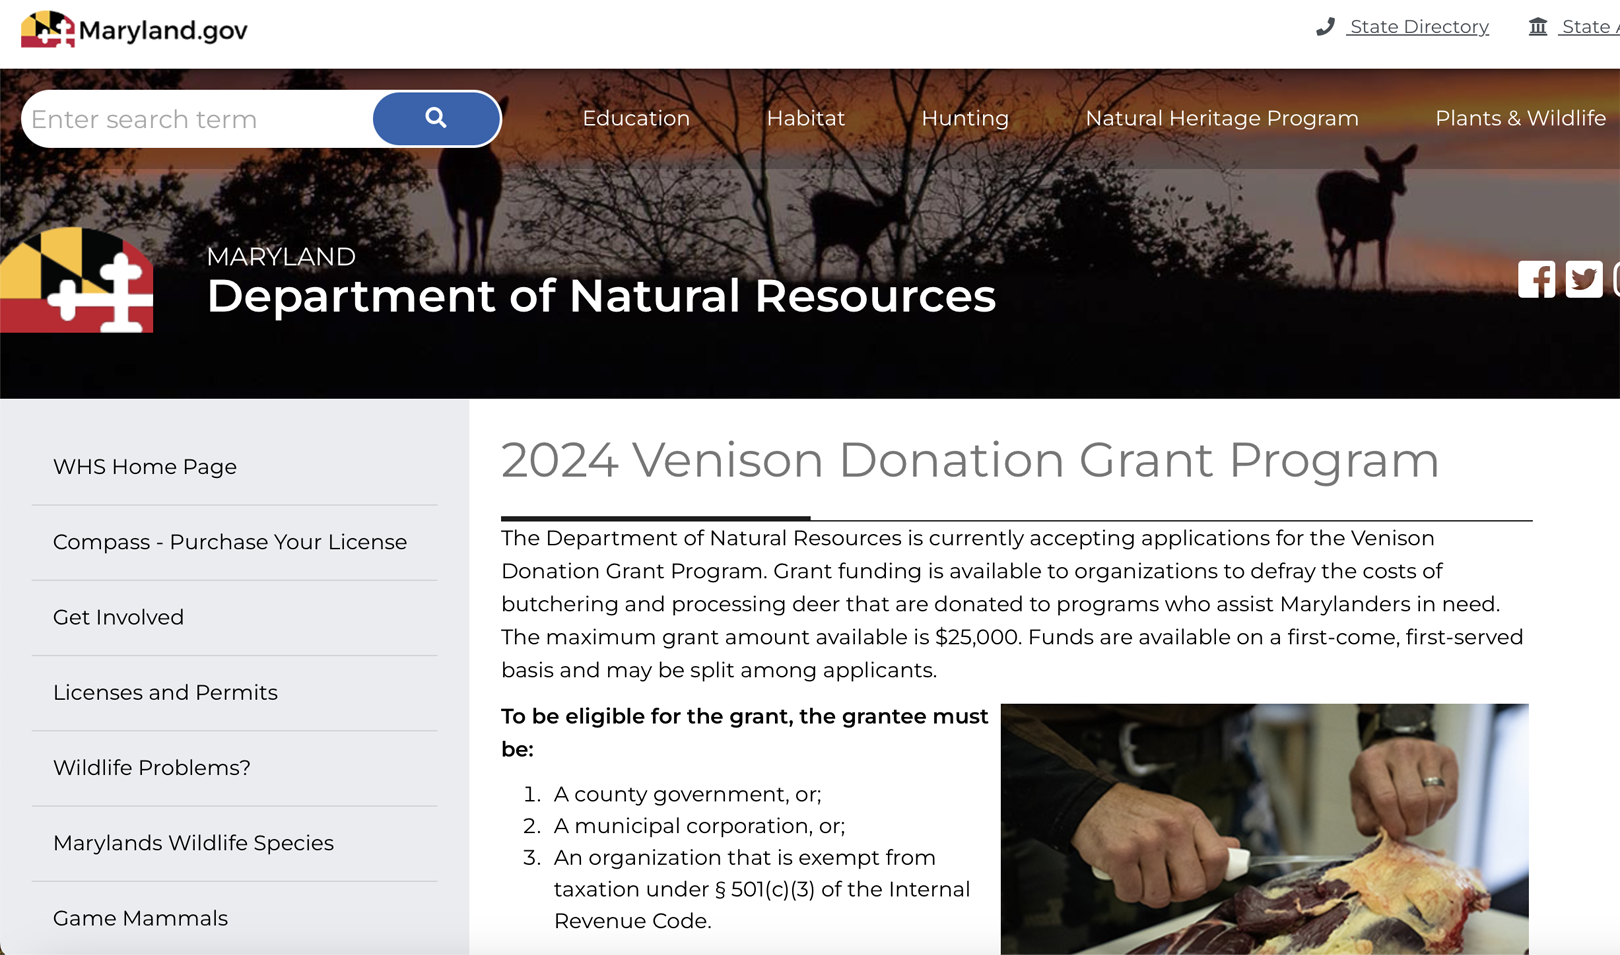 Grant Applications for Maryland’s 2024 Venison Donation Grant Program Due June 16